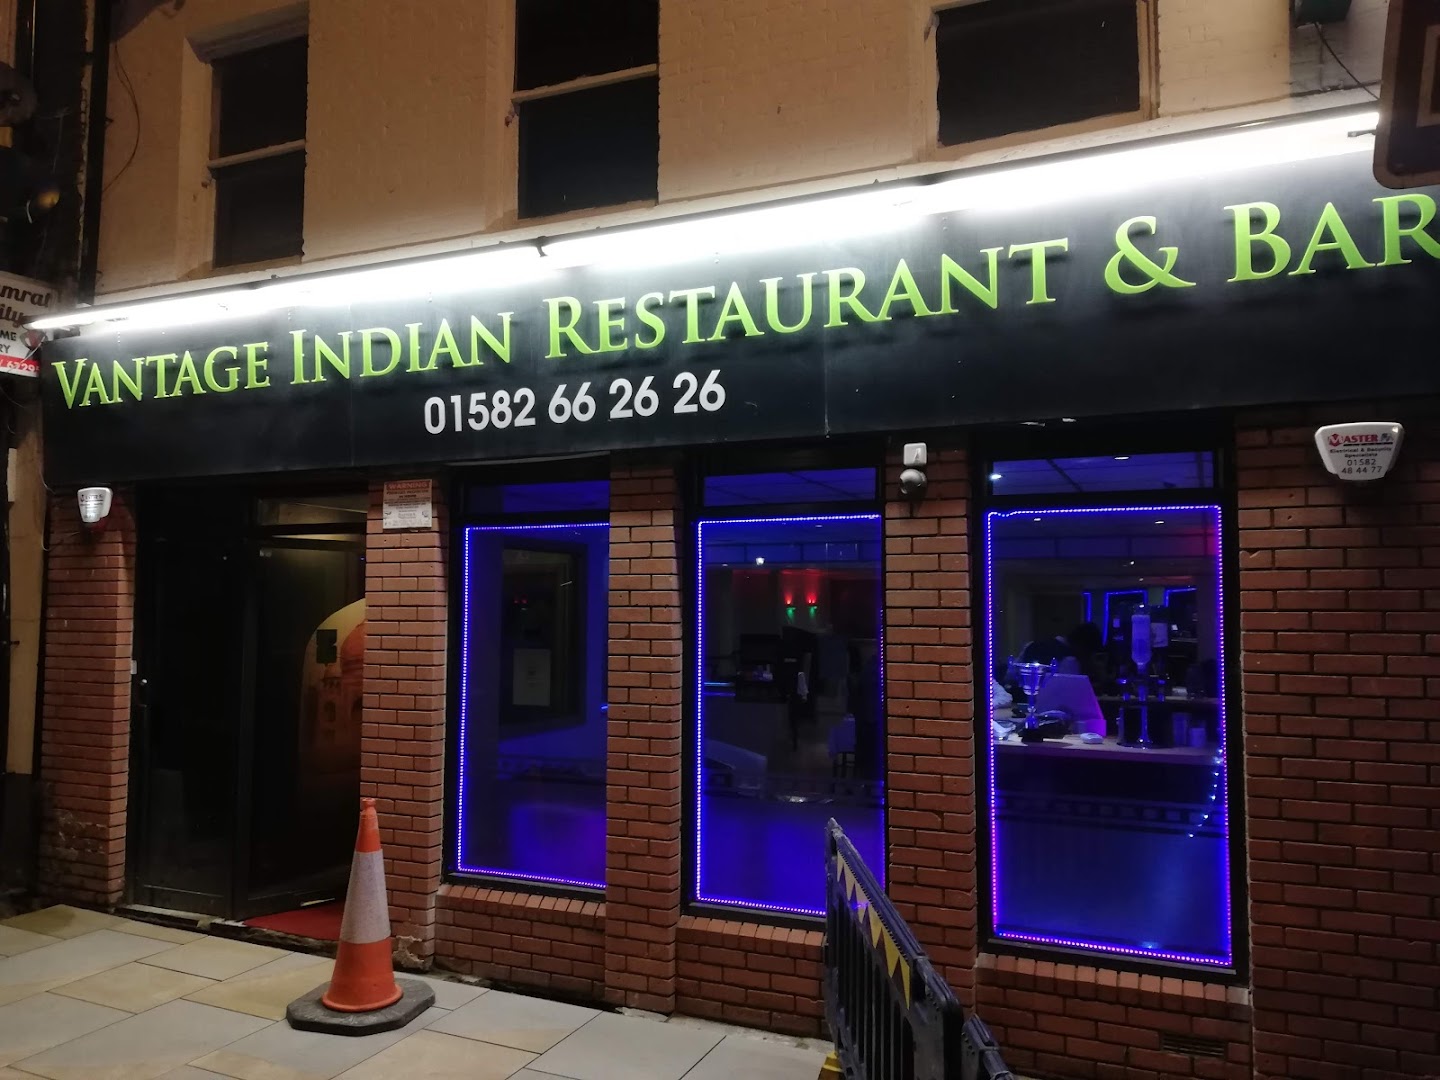 Vantage Indian Restaurant